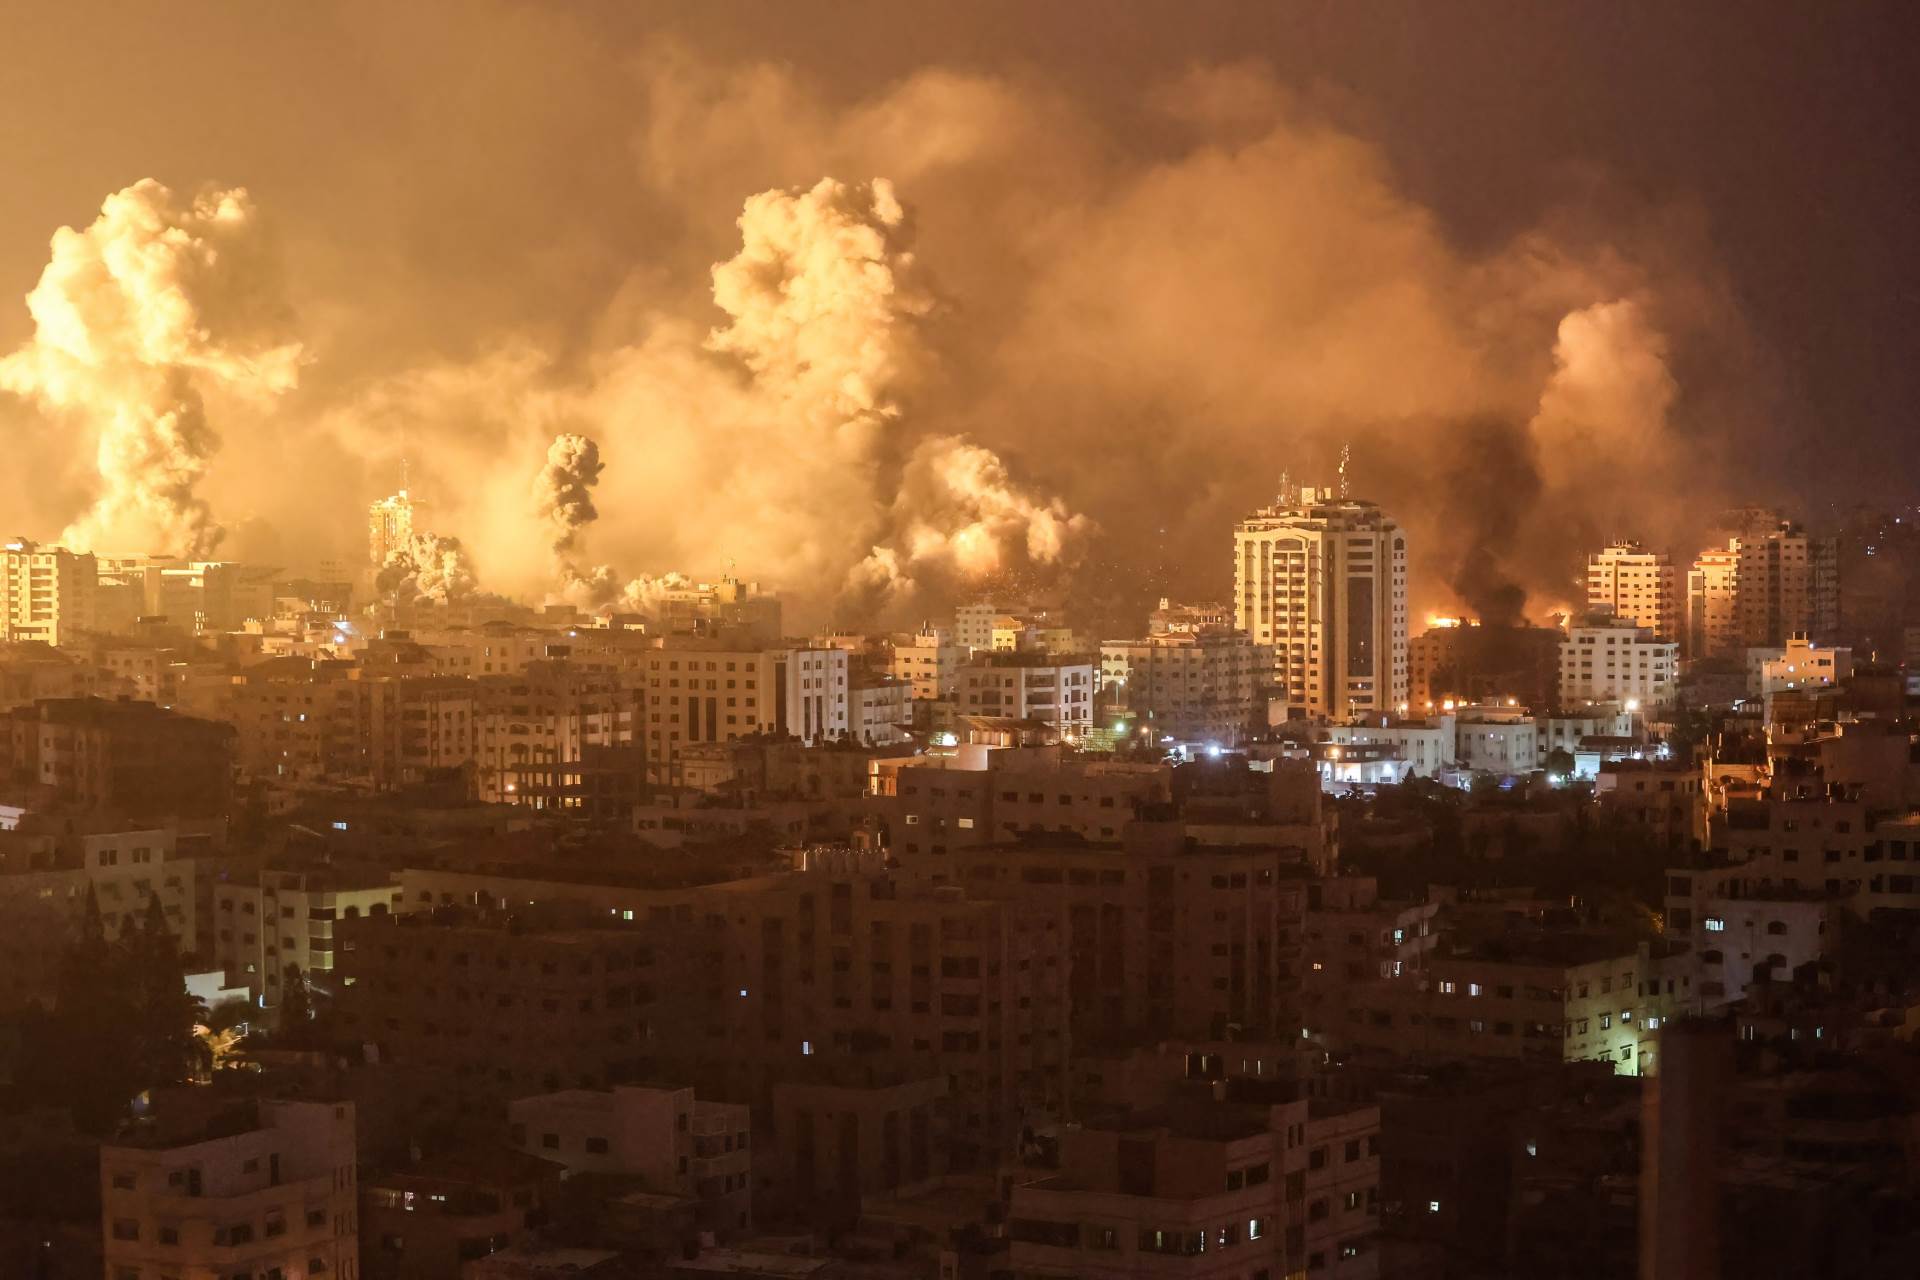  počeo vazdušni napad na Pojas Gaze 